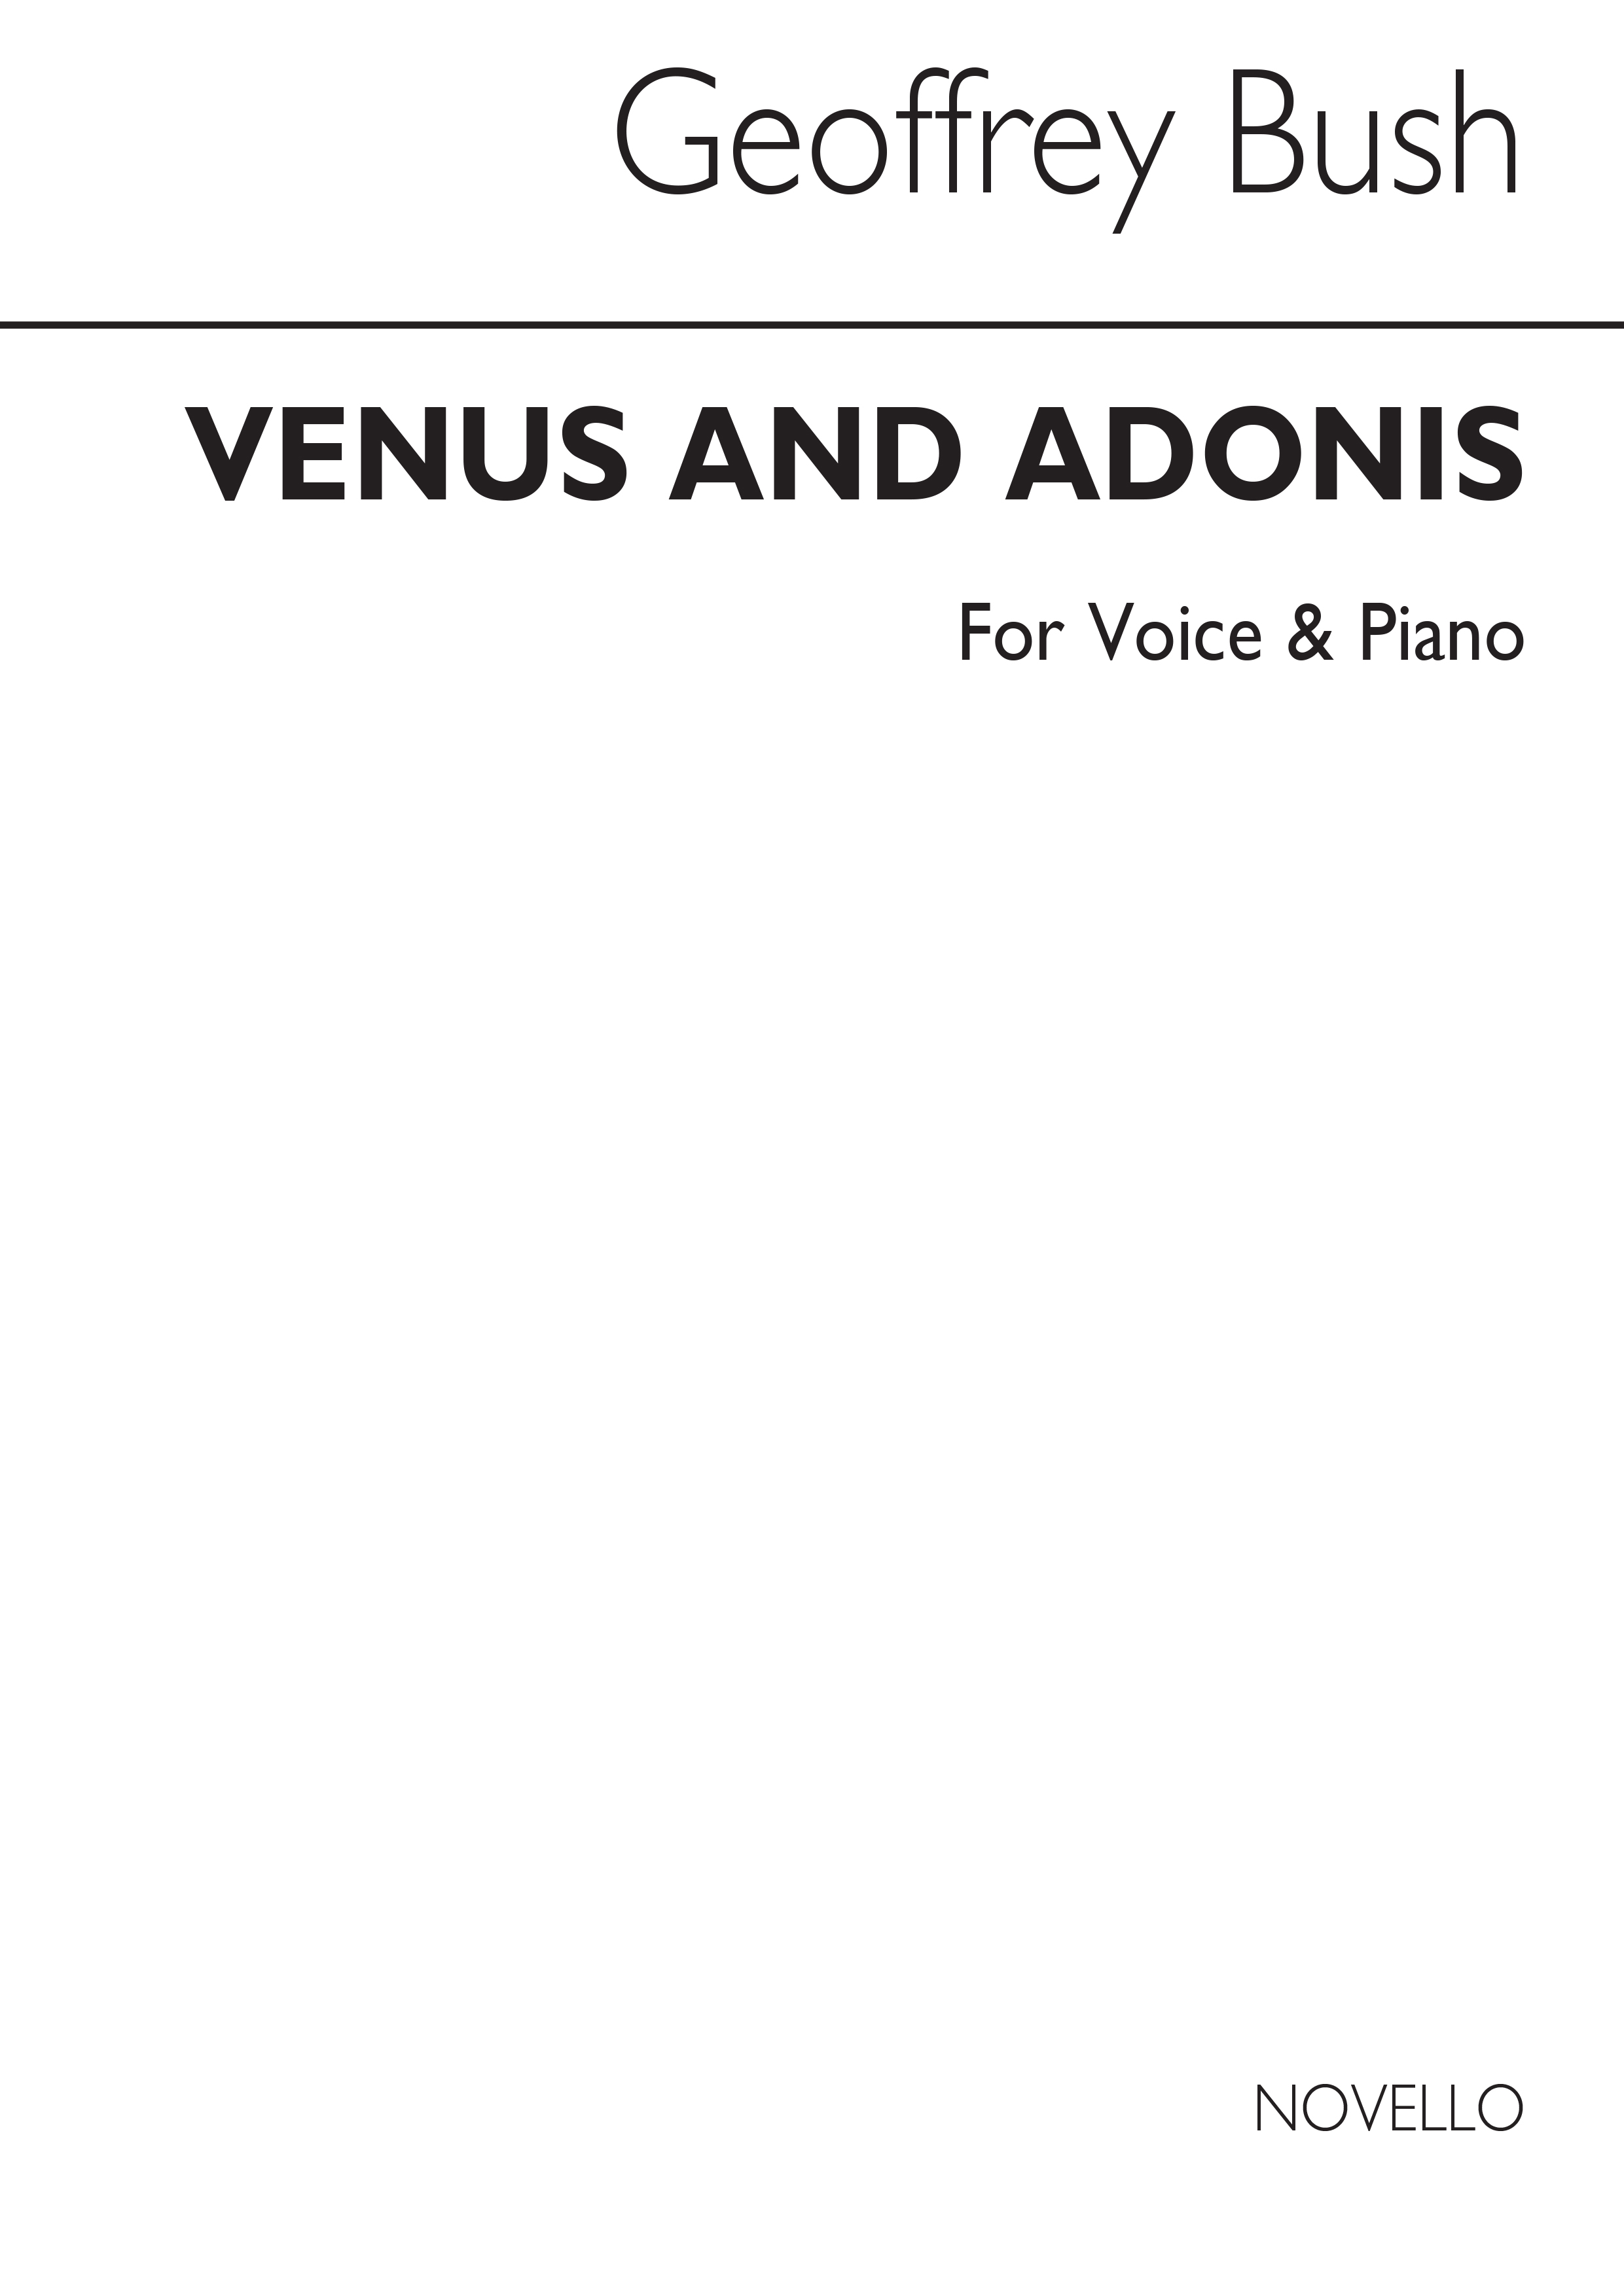 Geoffrey Bush: Venus & Adonis for Voice and Piano